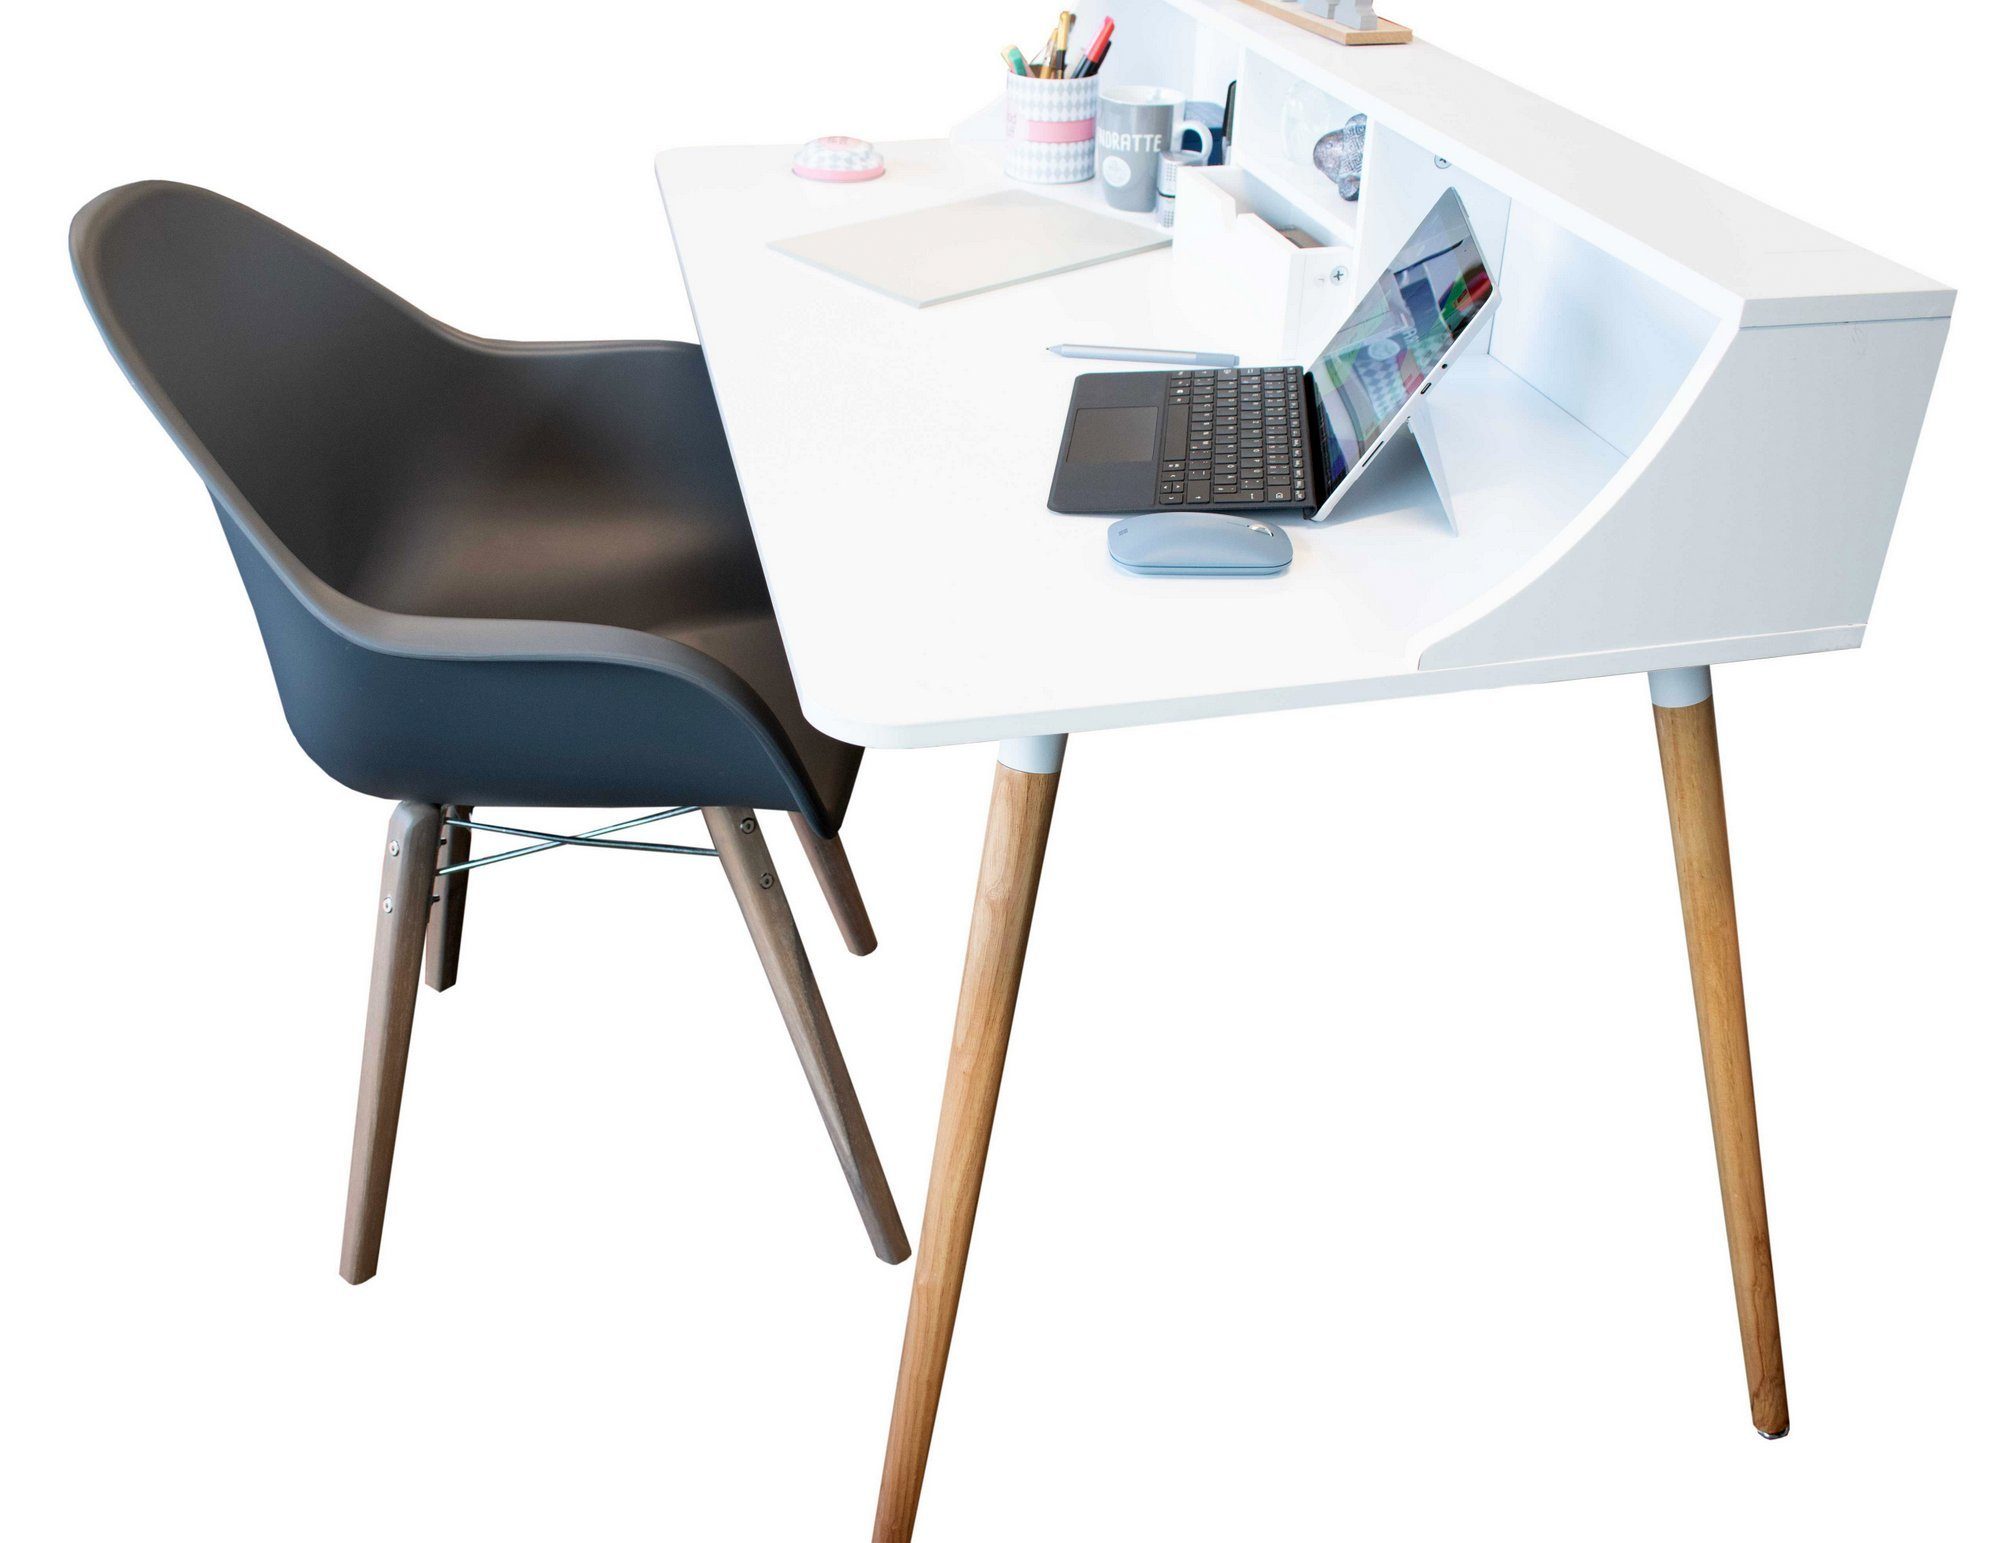 Computertisch Schreibtisch skandinavisch 120cm weiß Badregal osoltus osoltus Design